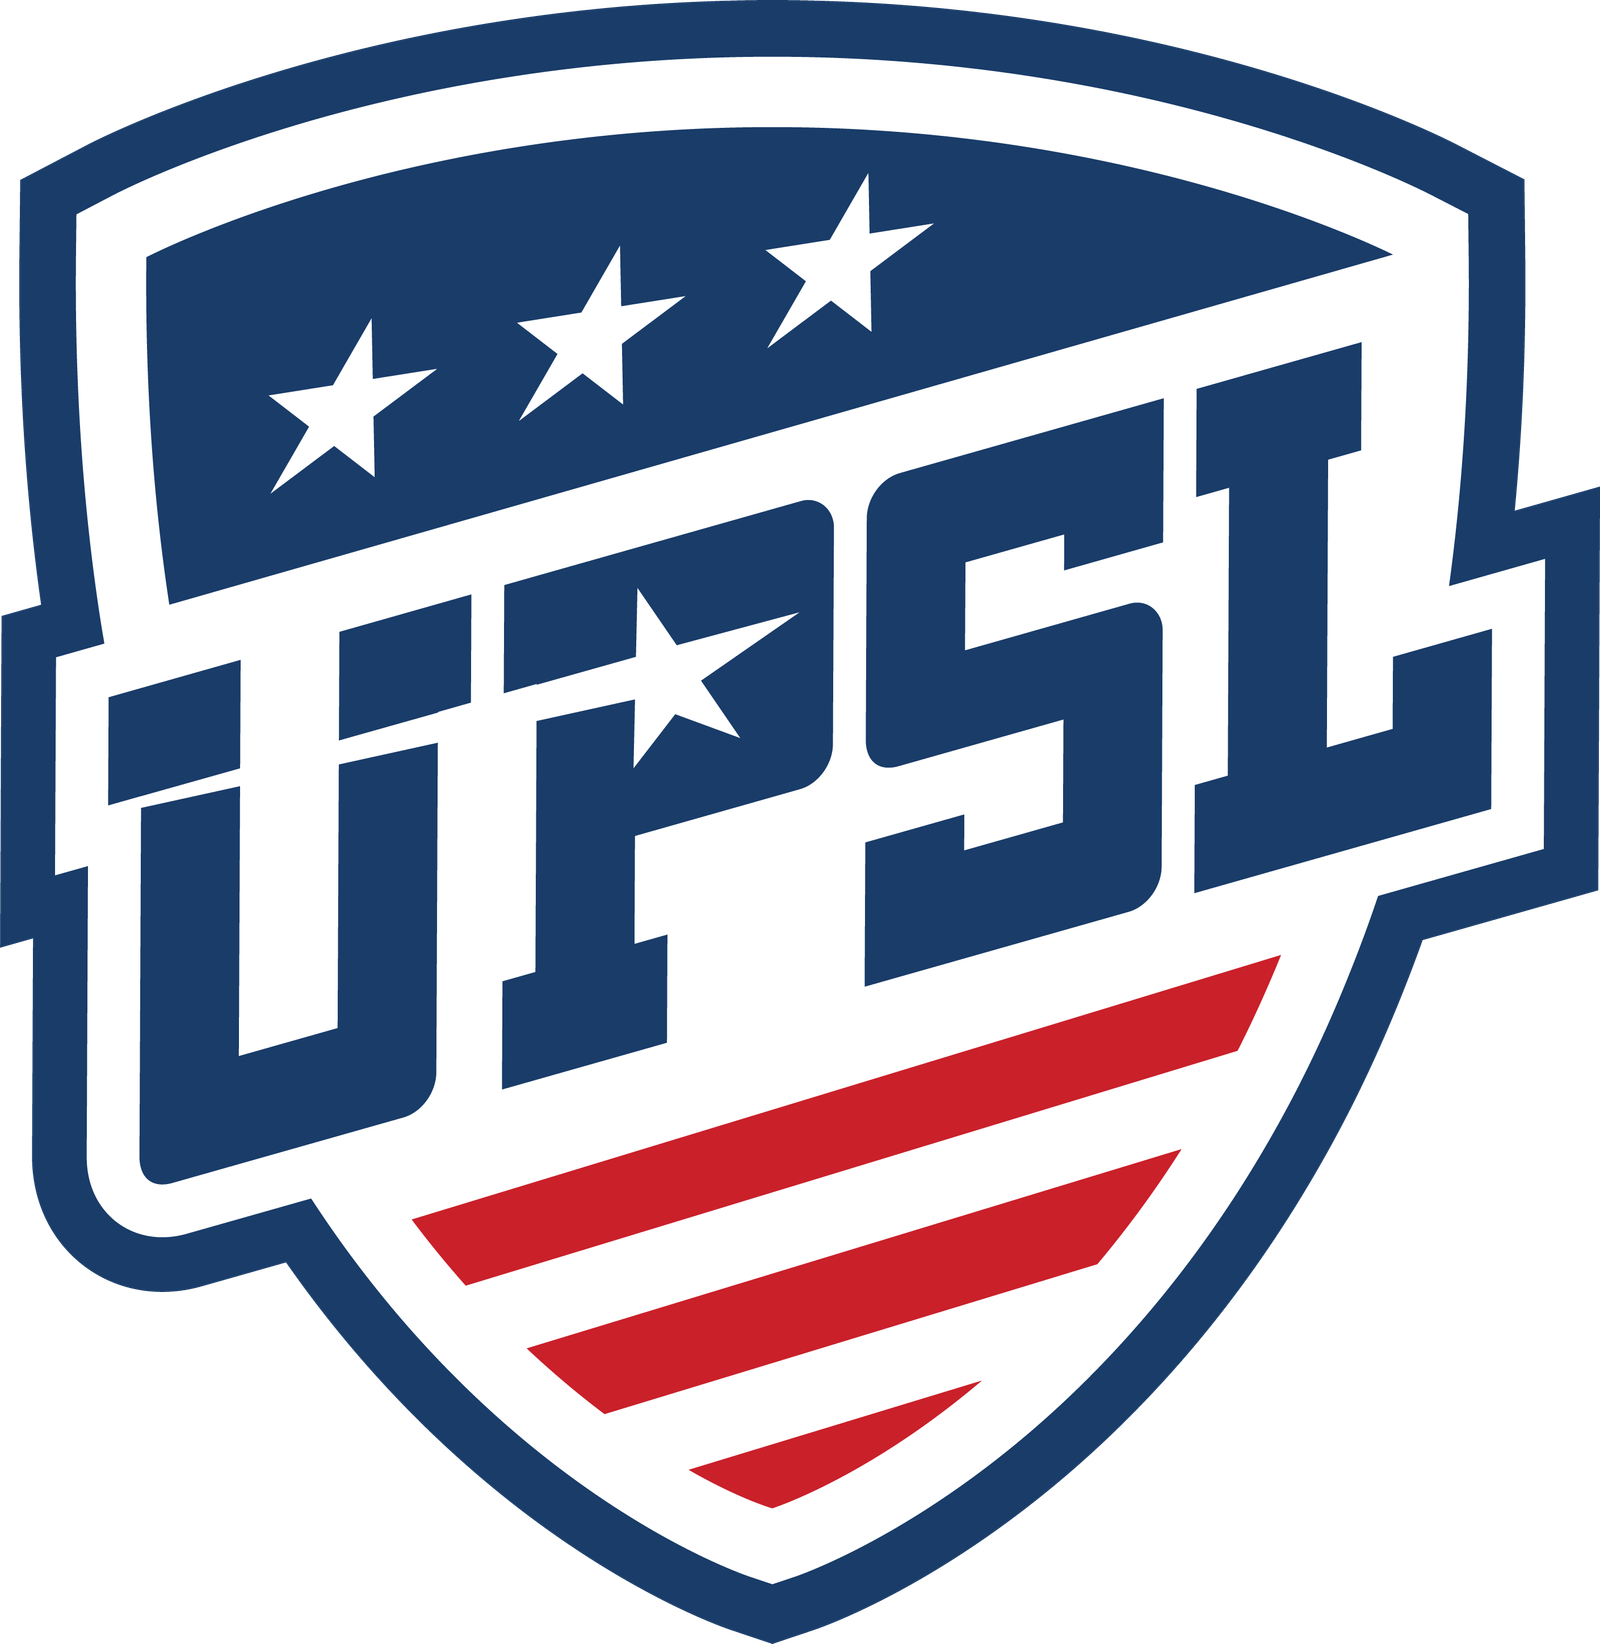 UPSL_new_logo